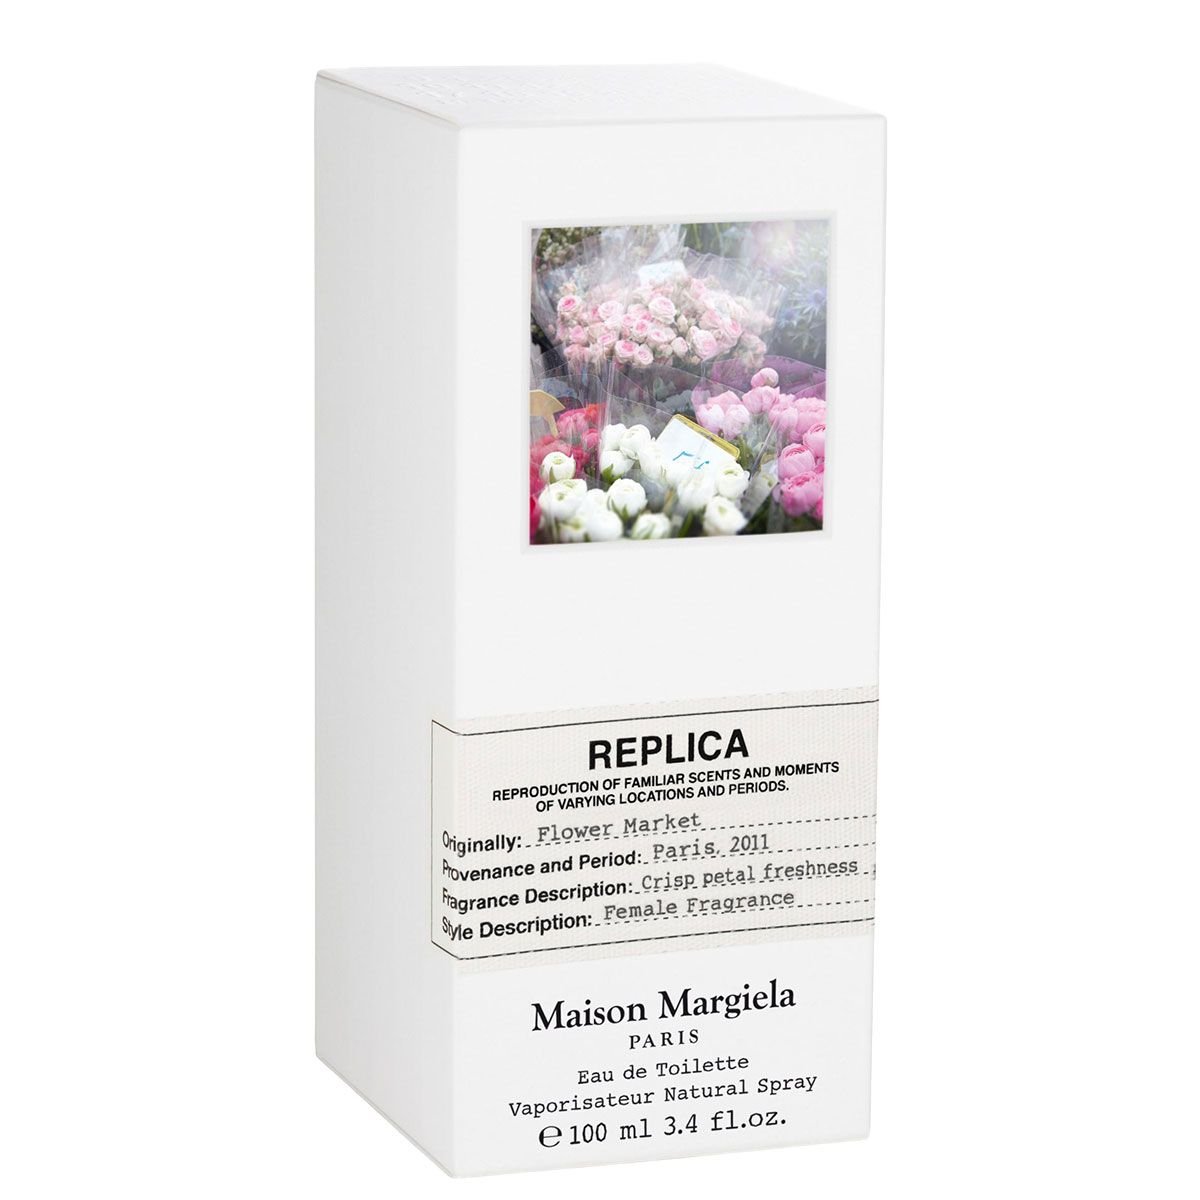  Maison Margiela Replica Flower Market 